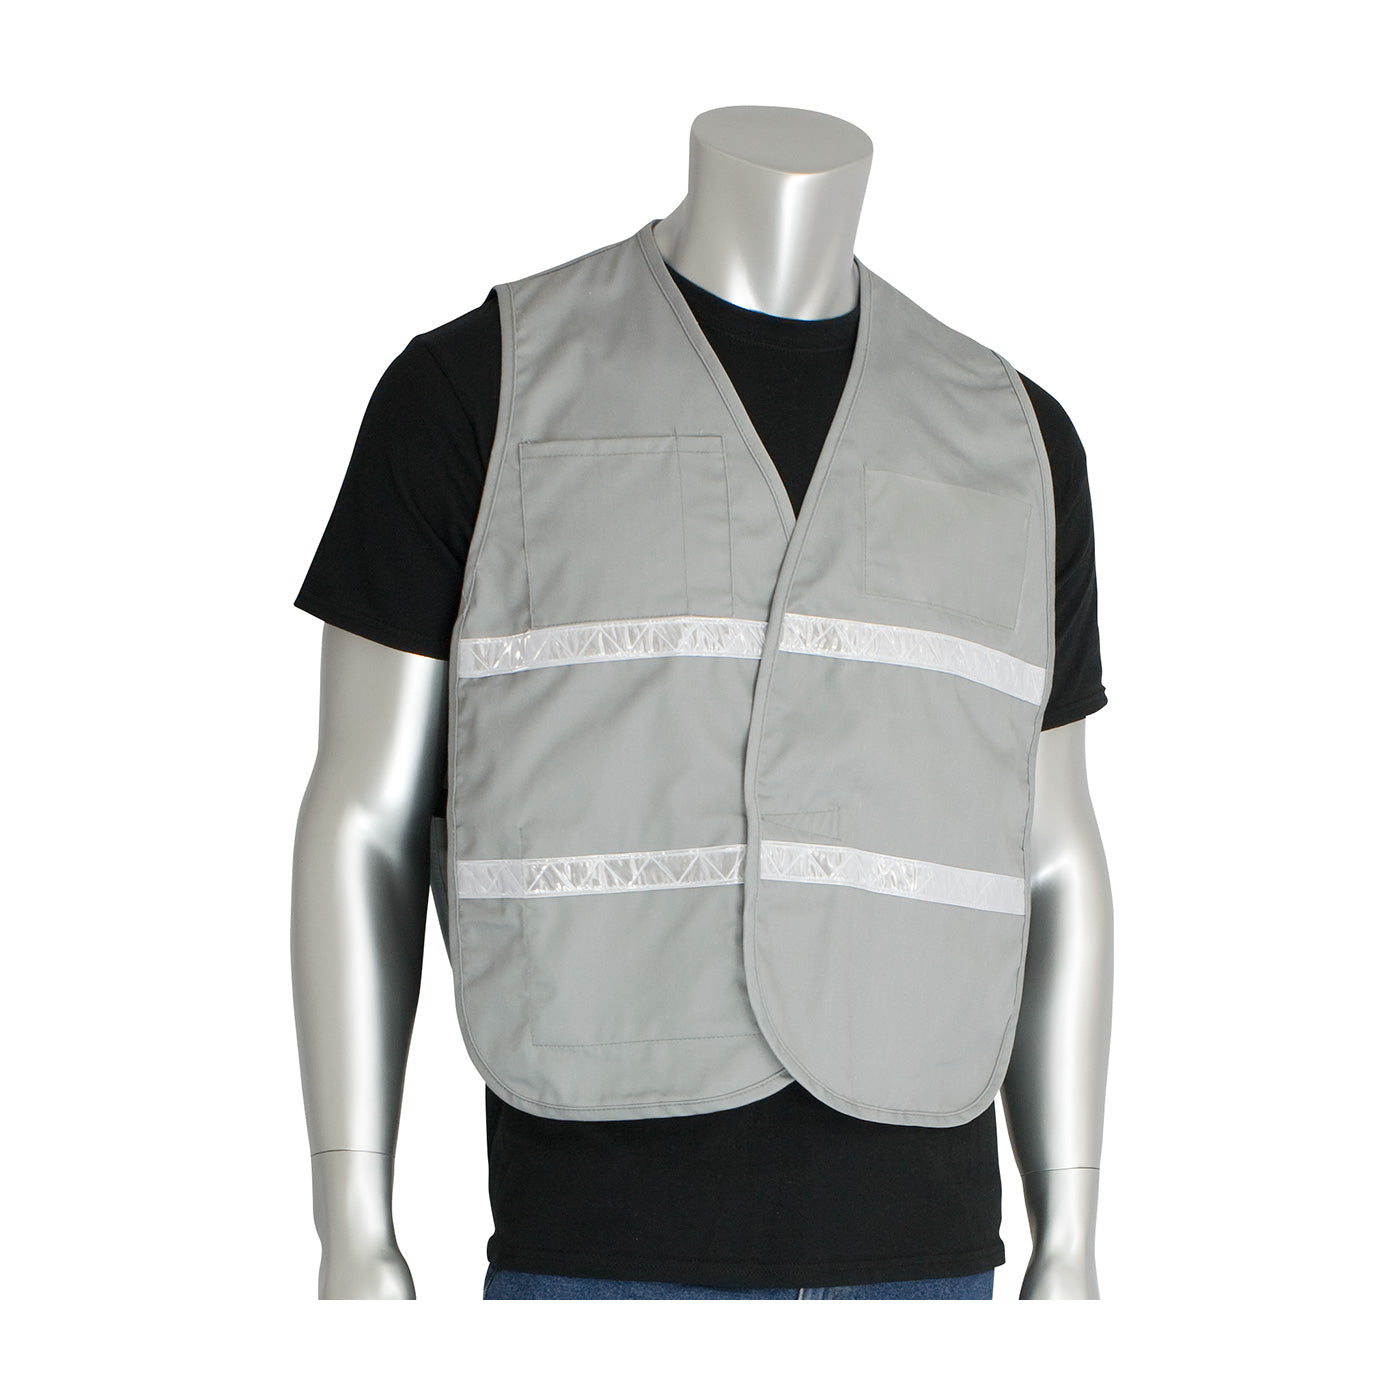 Non-ANSI Incident Command Vest - Cotton/Polyester Blend